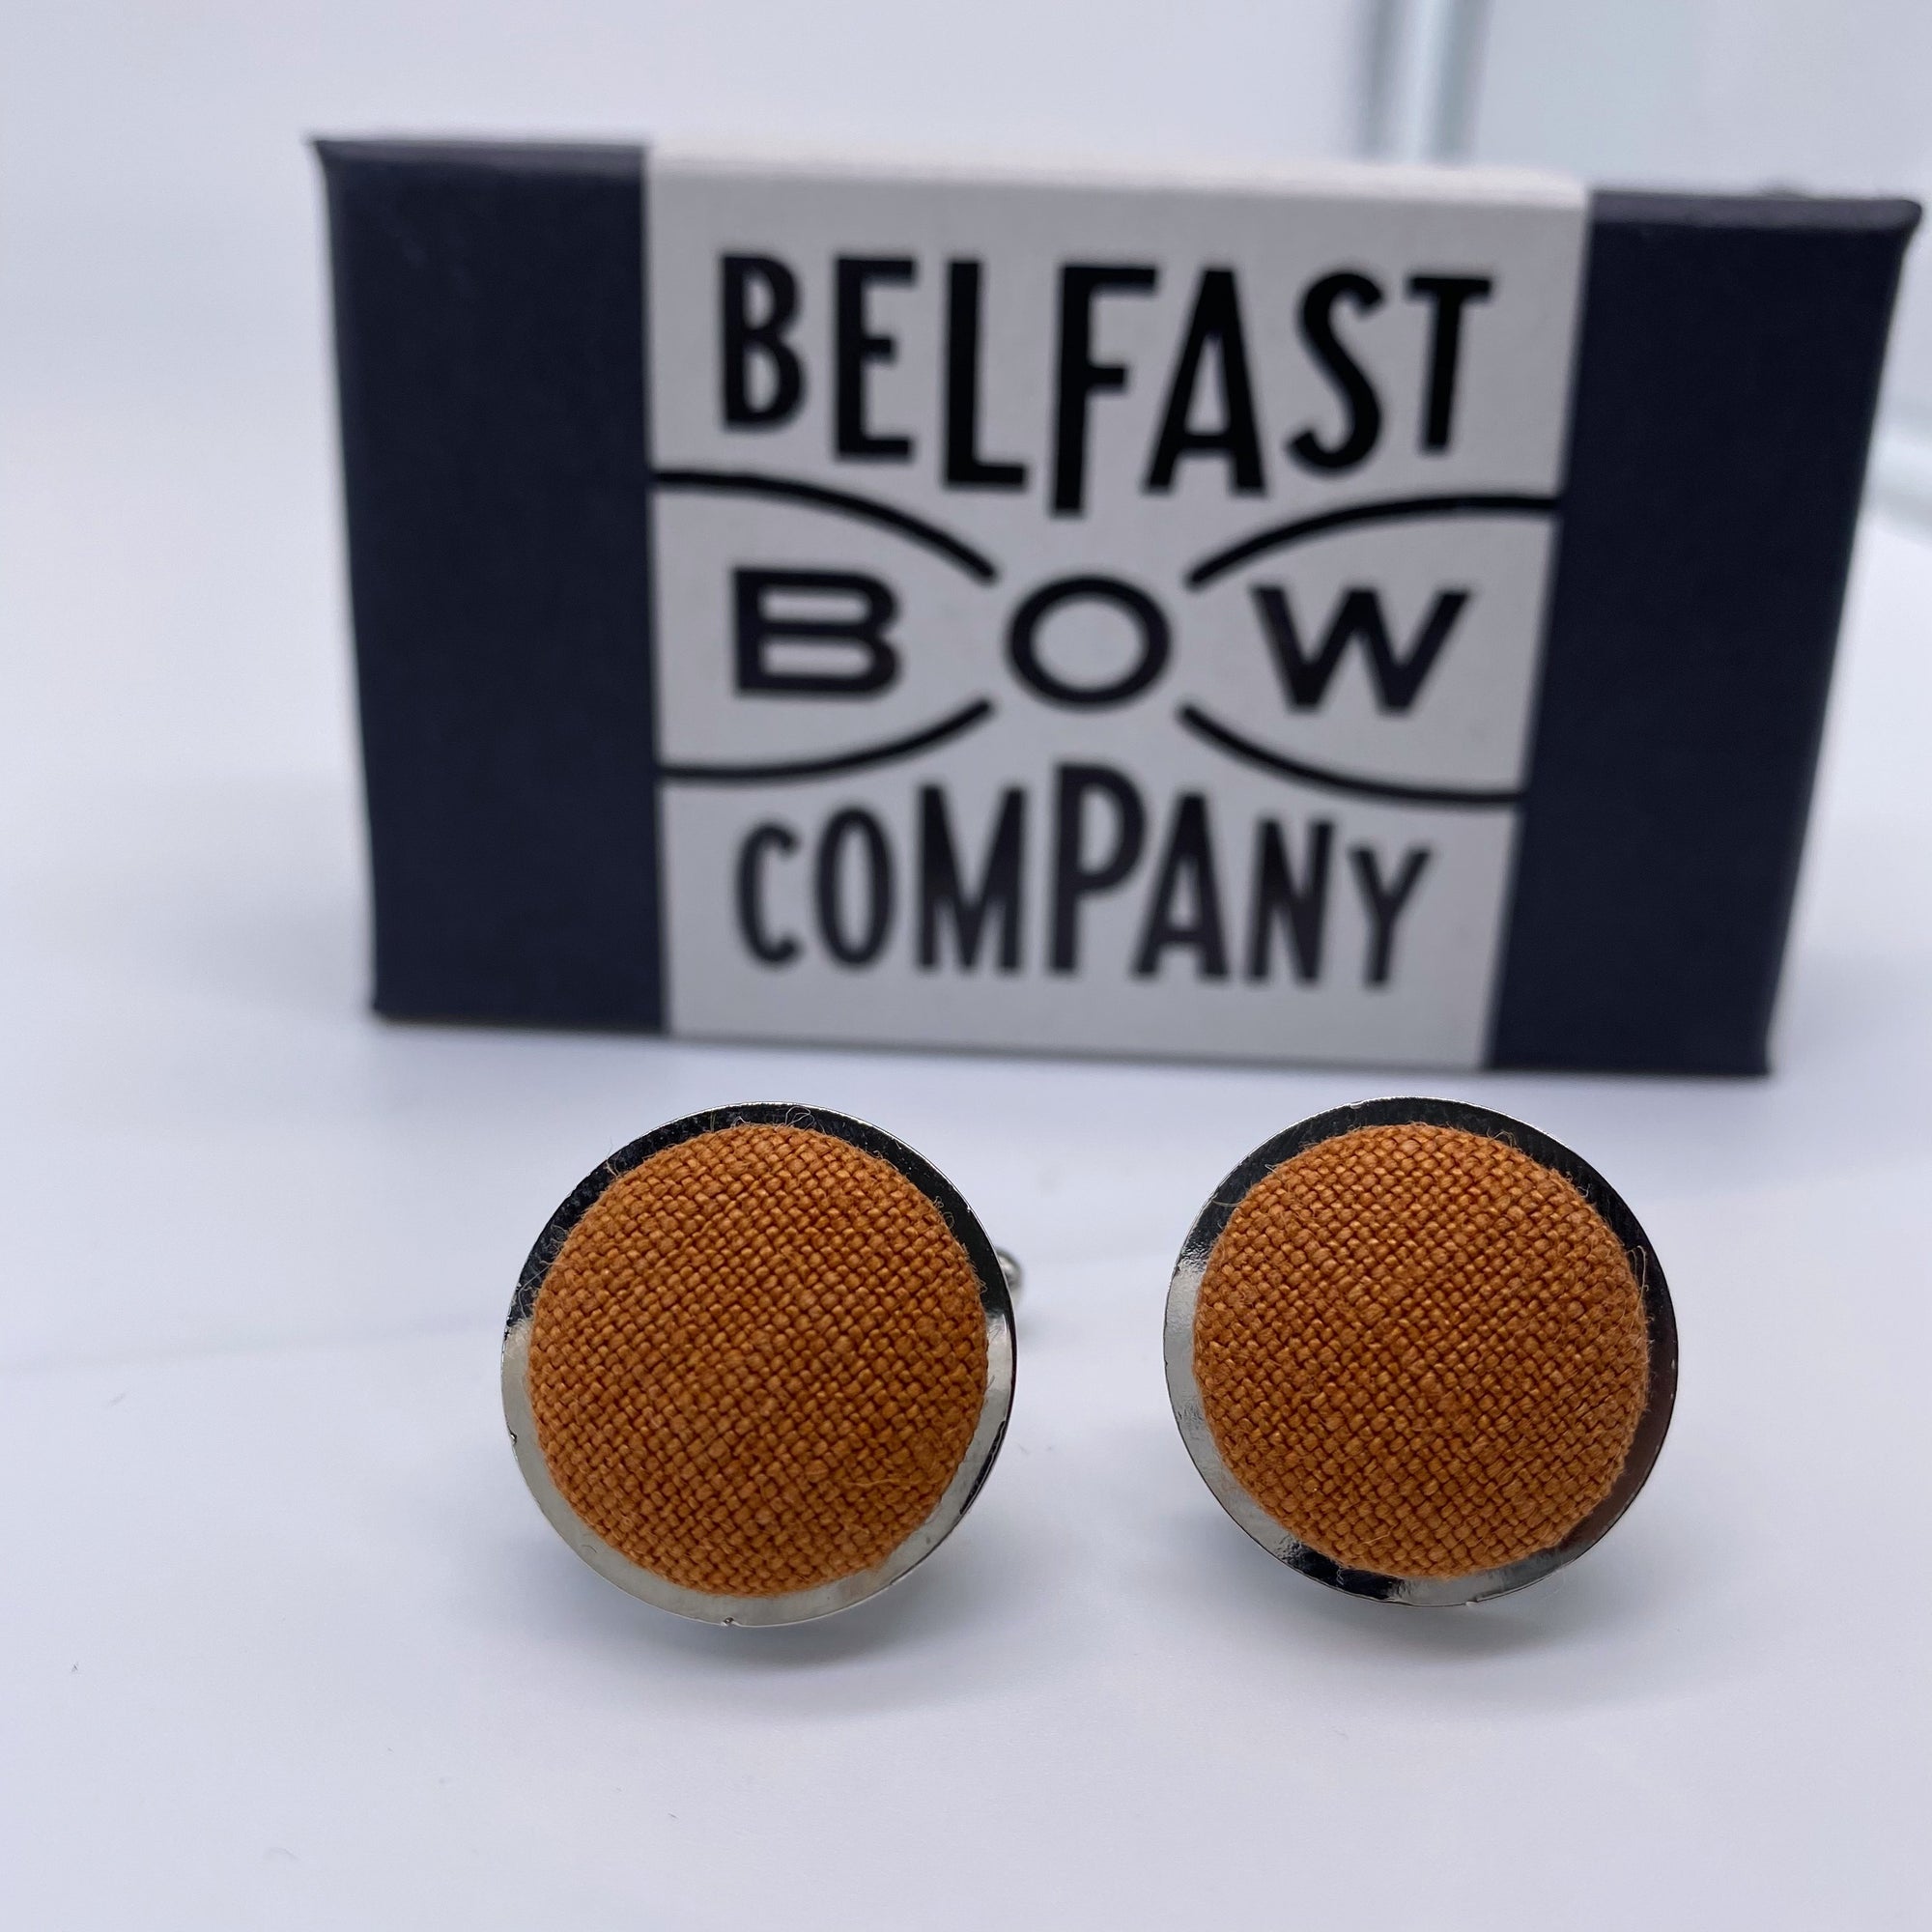 Irish Linen Cufflinks in Burnt Orange by the Belfast Bow Company